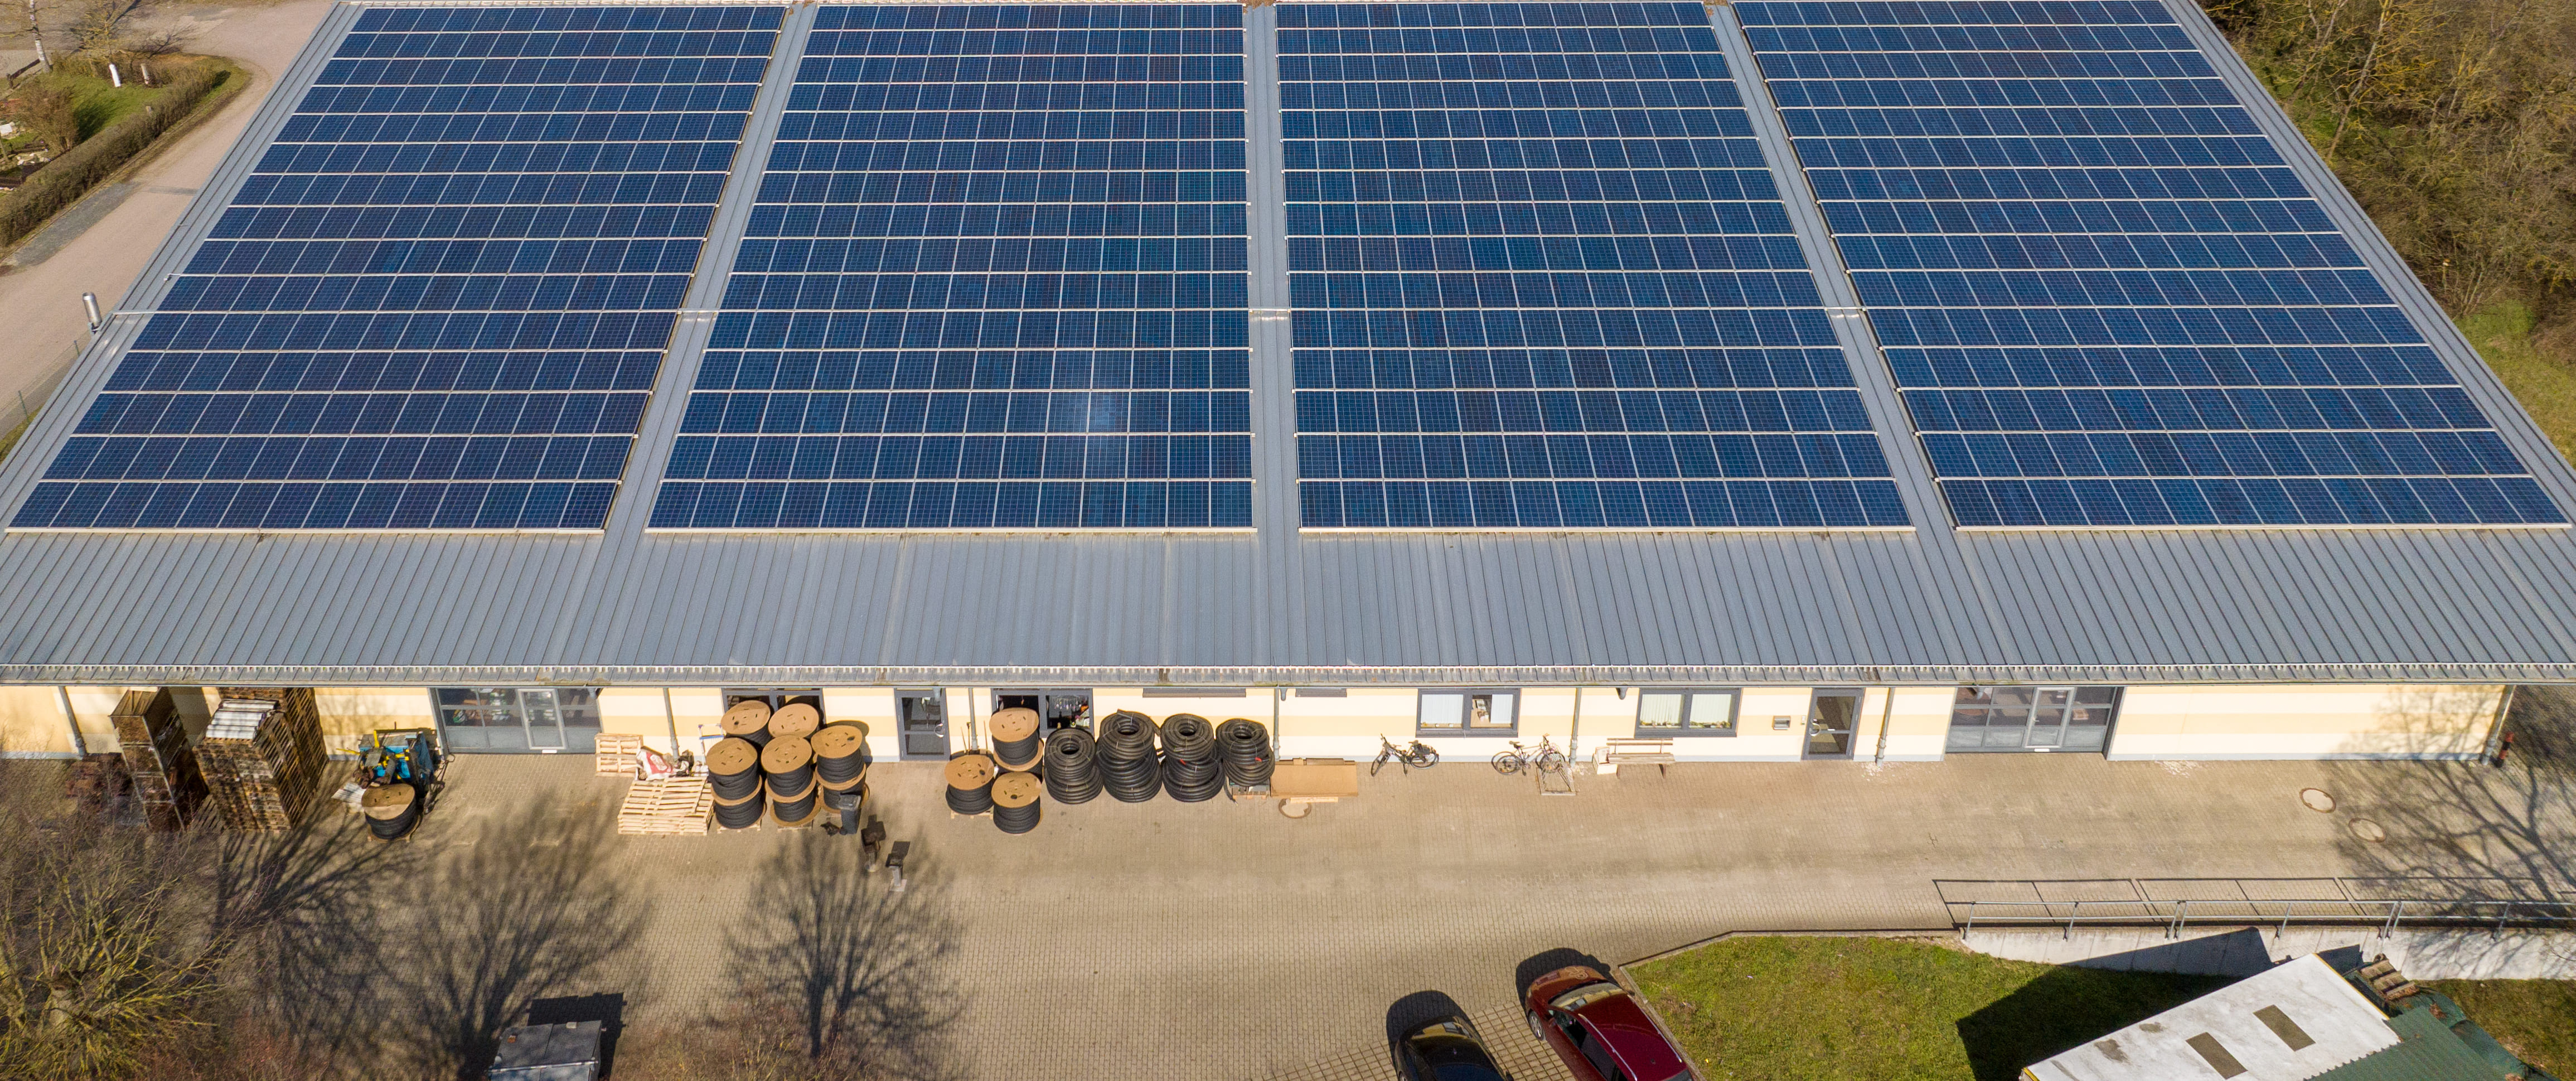 299,00 kWc En opération, Sur toiture, Allemagne (Baviere)